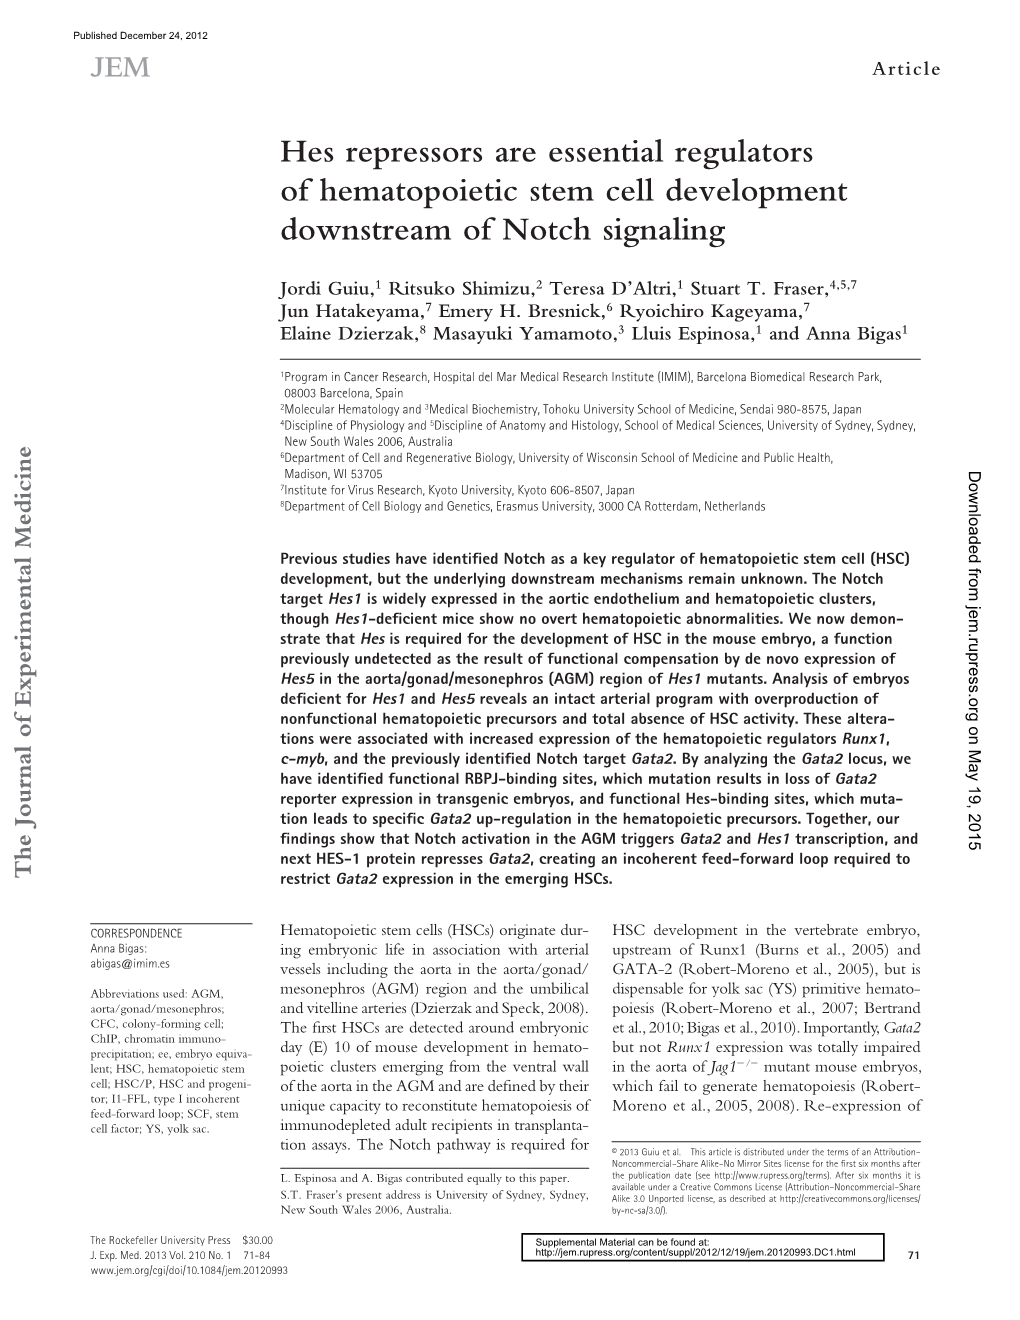 Hes Repressors Are Essential Regulators of Hematopoietic Stem Cell Development Downstream of Notch Signaling